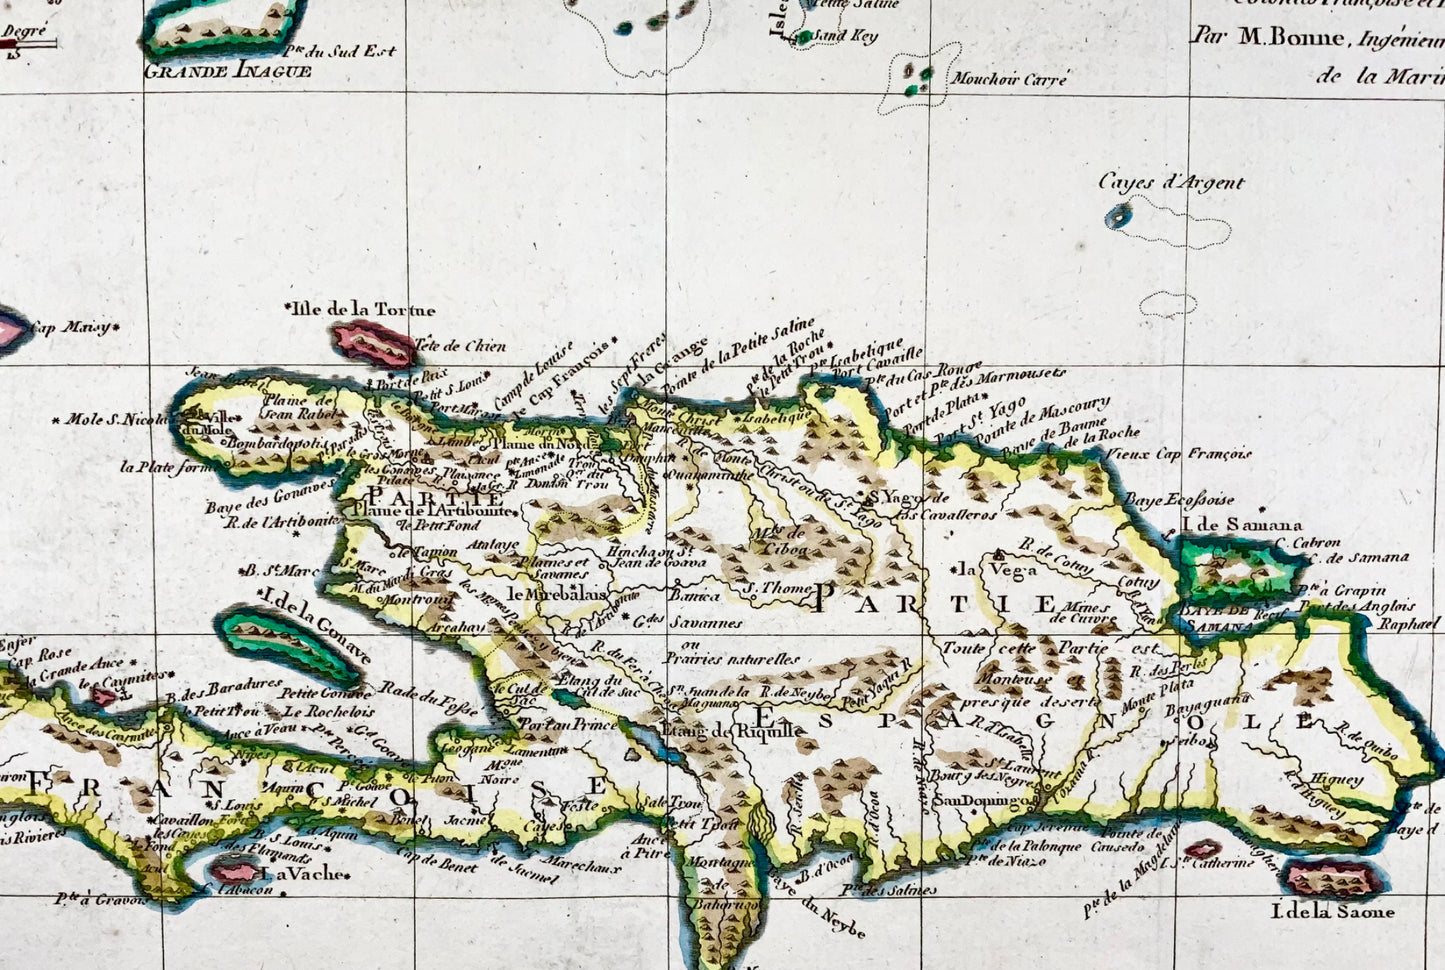 1780 Bonne, map of Hispaniola, Dominican Republic, Haiti, Antilles hand coloured